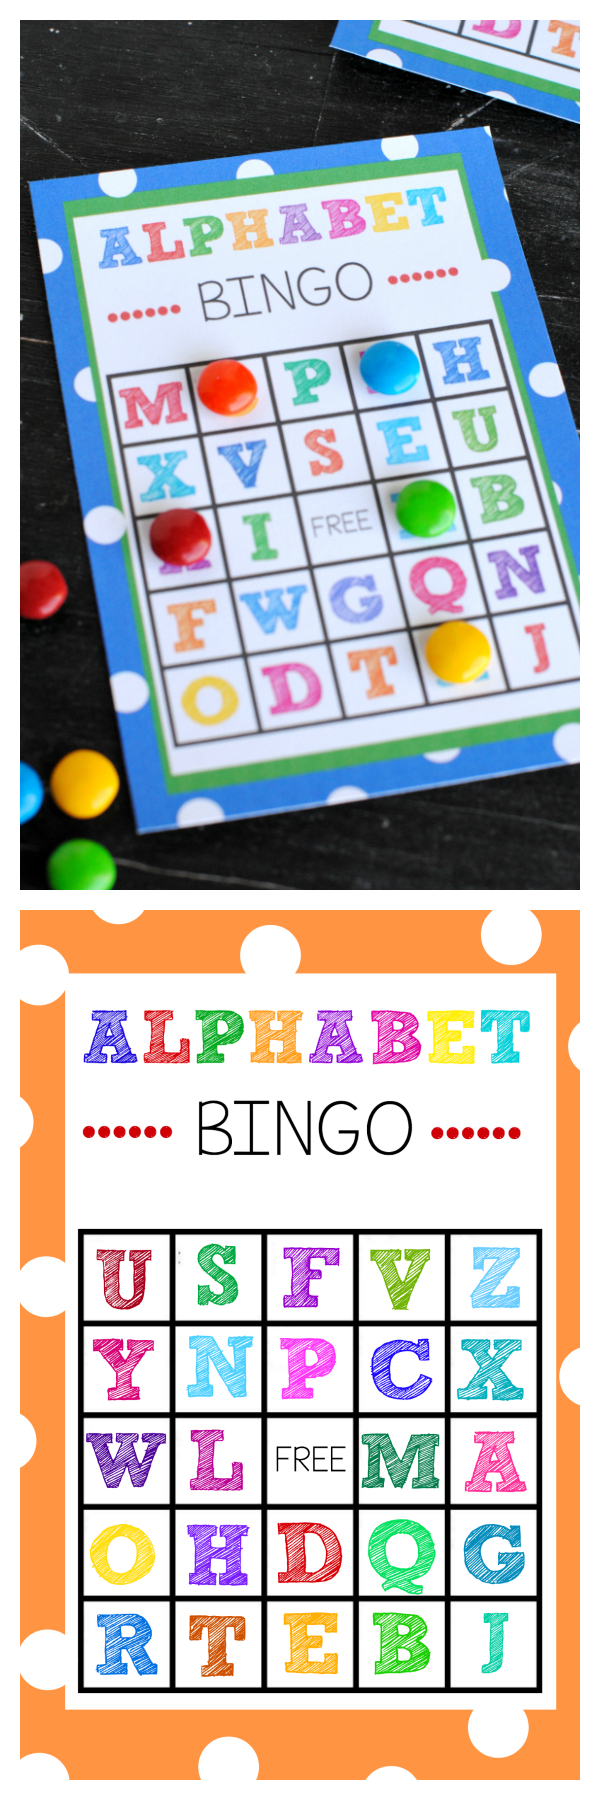 Free Printable Alphabet Bingo Game - Free Printable Alphabet Bingo Cards